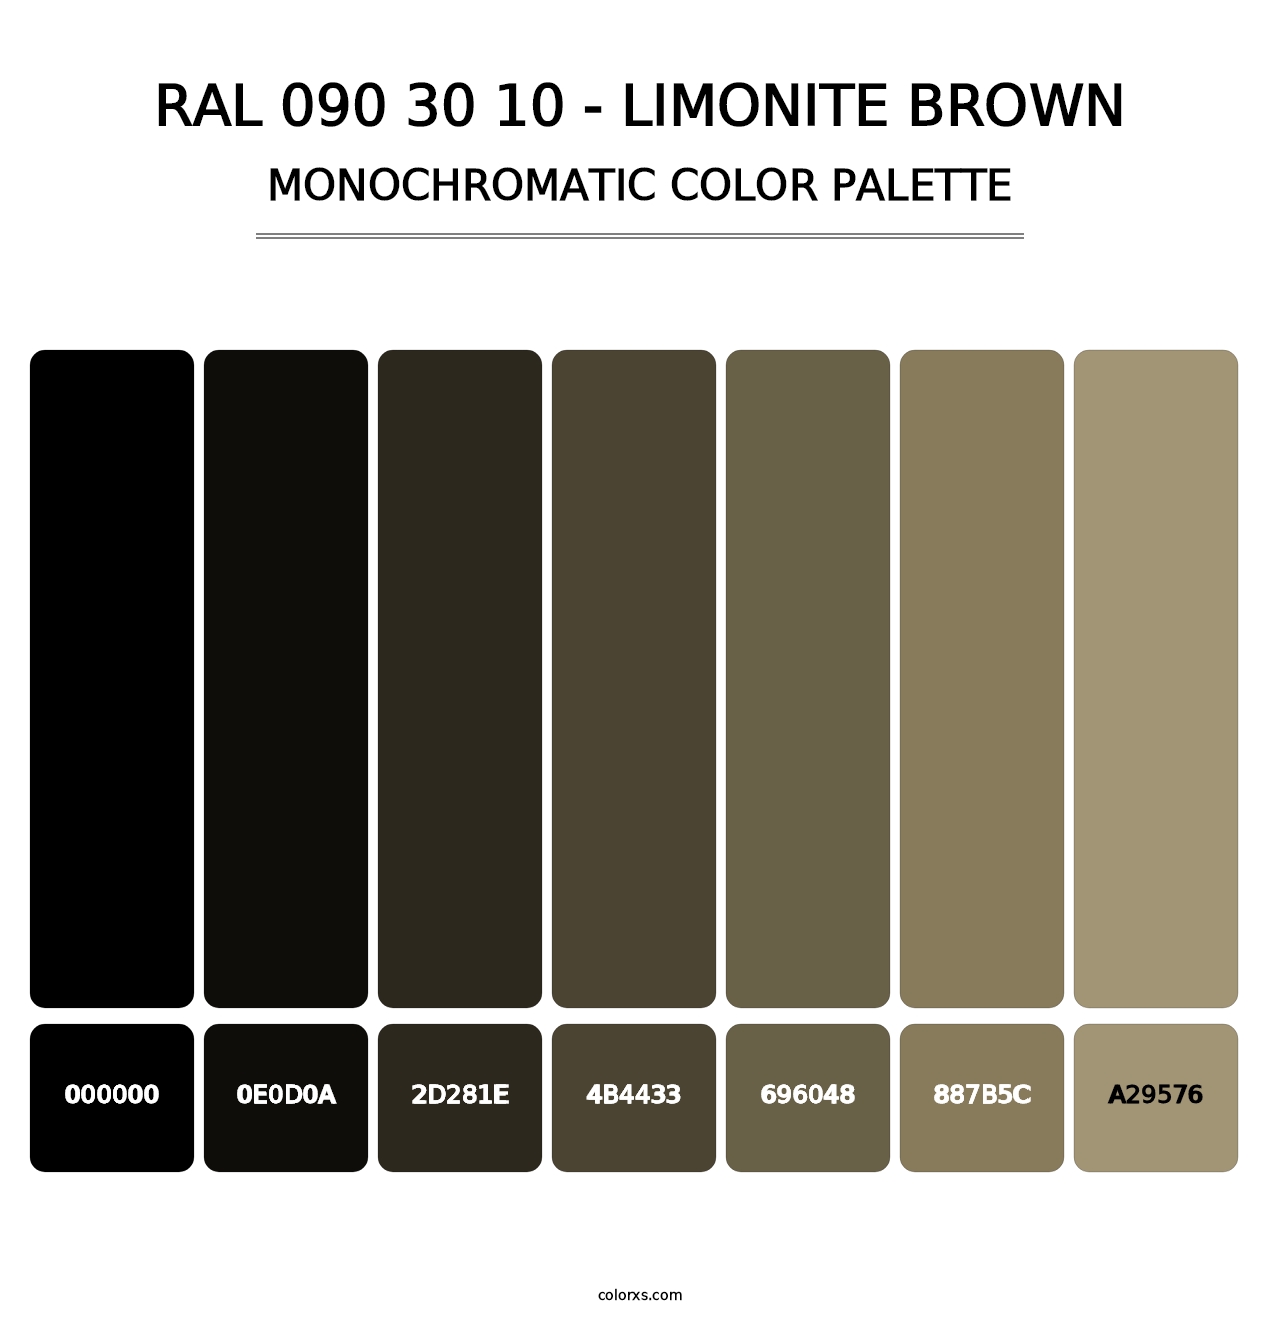 RAL 090 30 10 - Limonite Brown - Monochromatic Color Palette